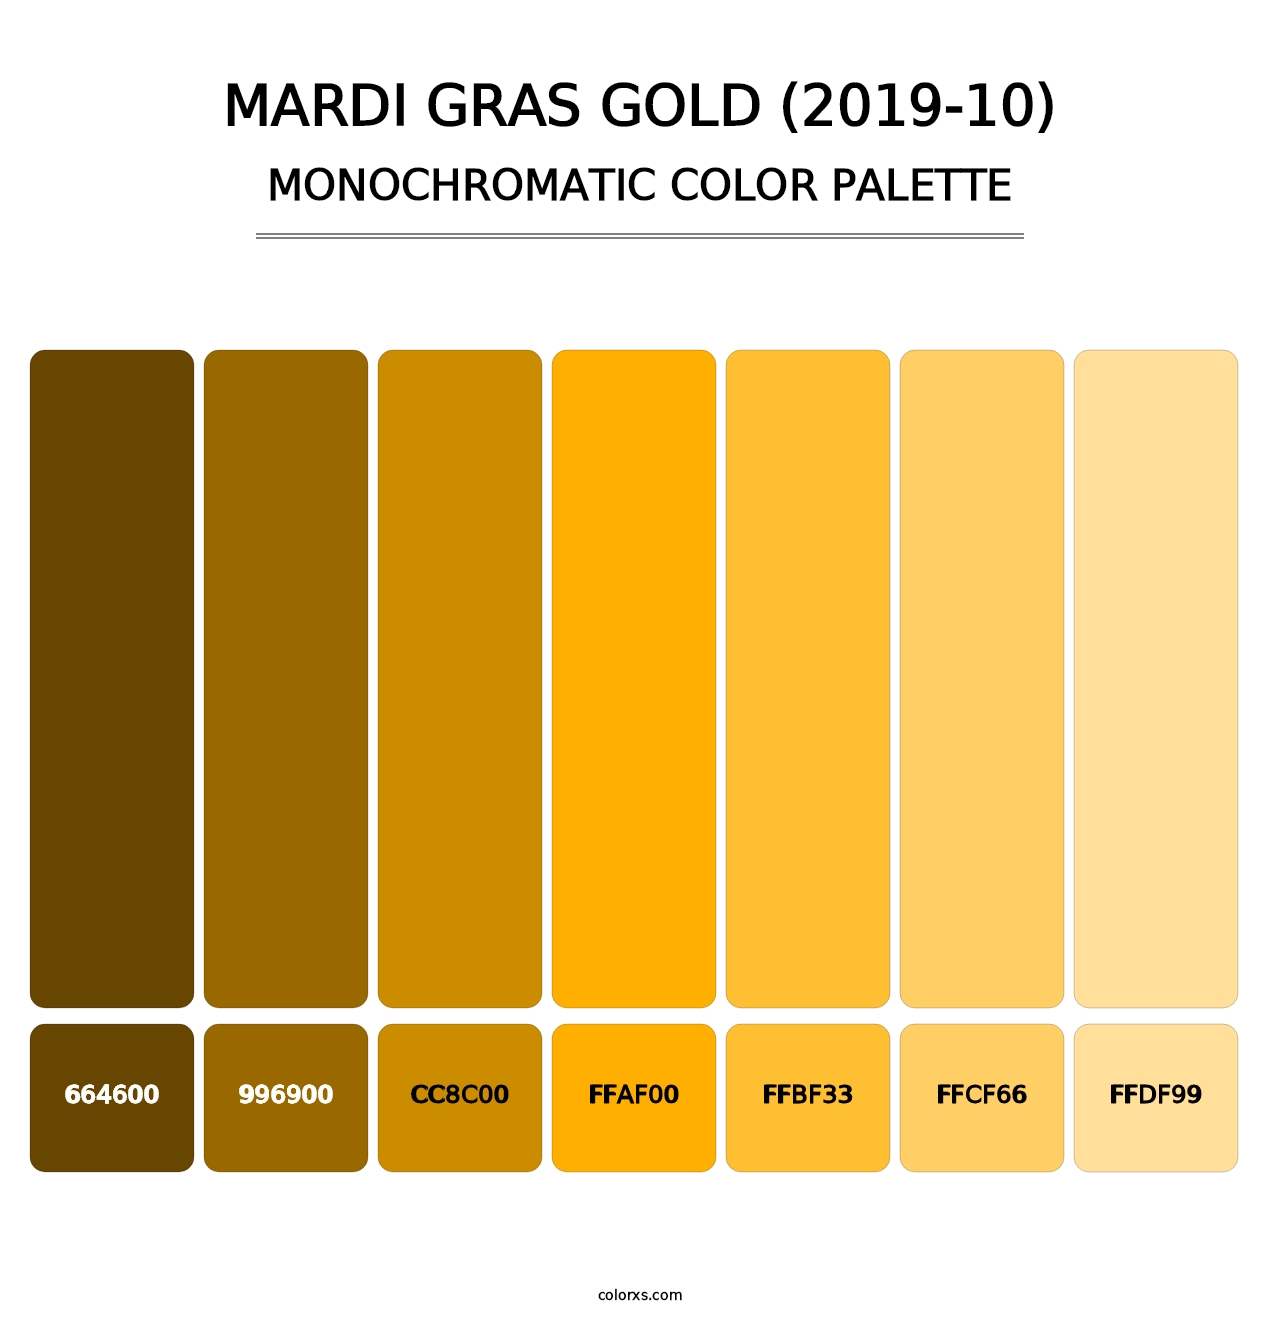 Mardi Gras Gold (2019-10) - Monochromatic Color Palette